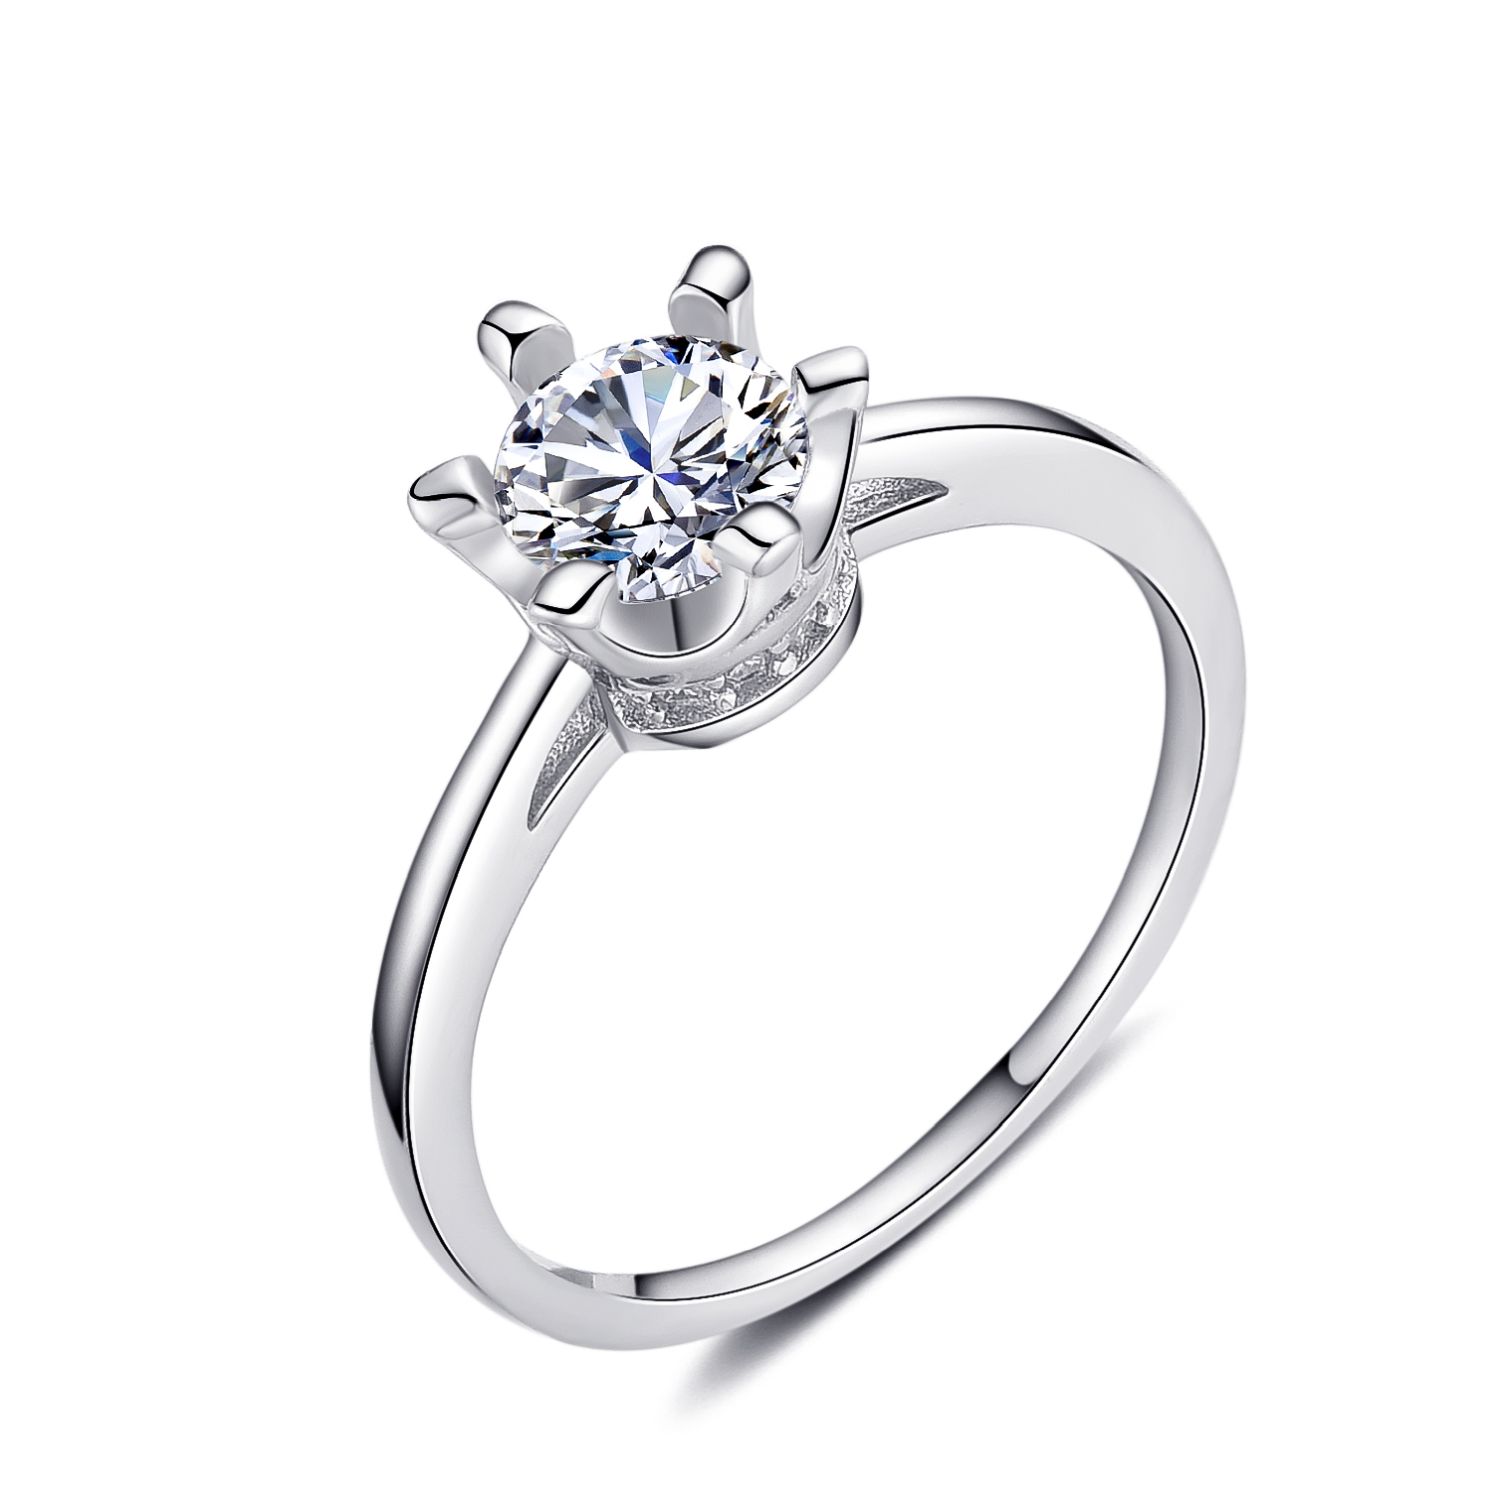 MOISS Moiss stříbrný prsten KORUNKA R0000546 Velikost 55 mm R0000549